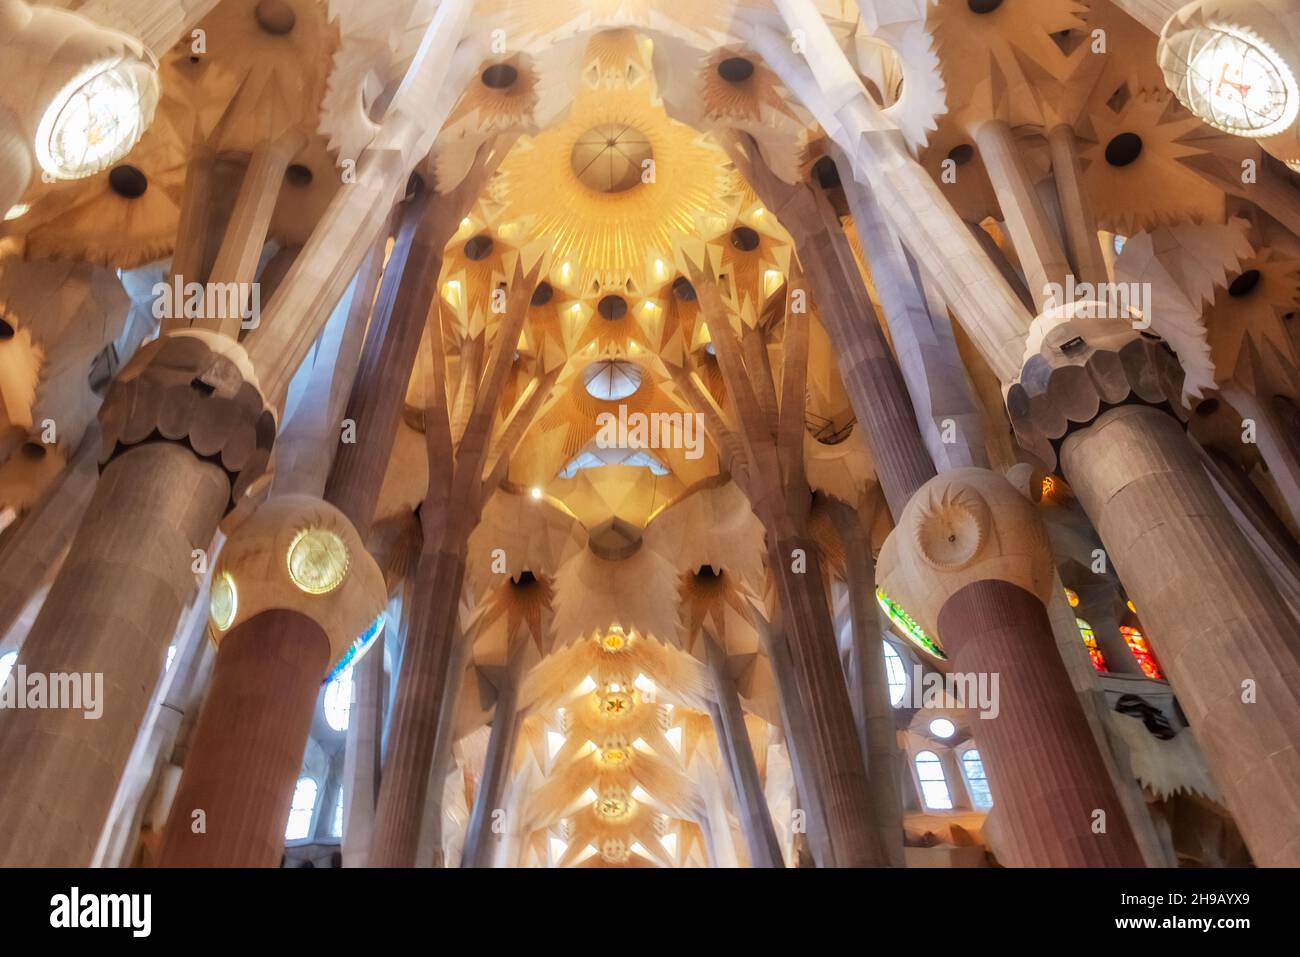 Interior of La Sagrada Familia by Gaudi, Barcelona, Barcelona Province, Catalonia Autonomous Community, Spain Stock Photo